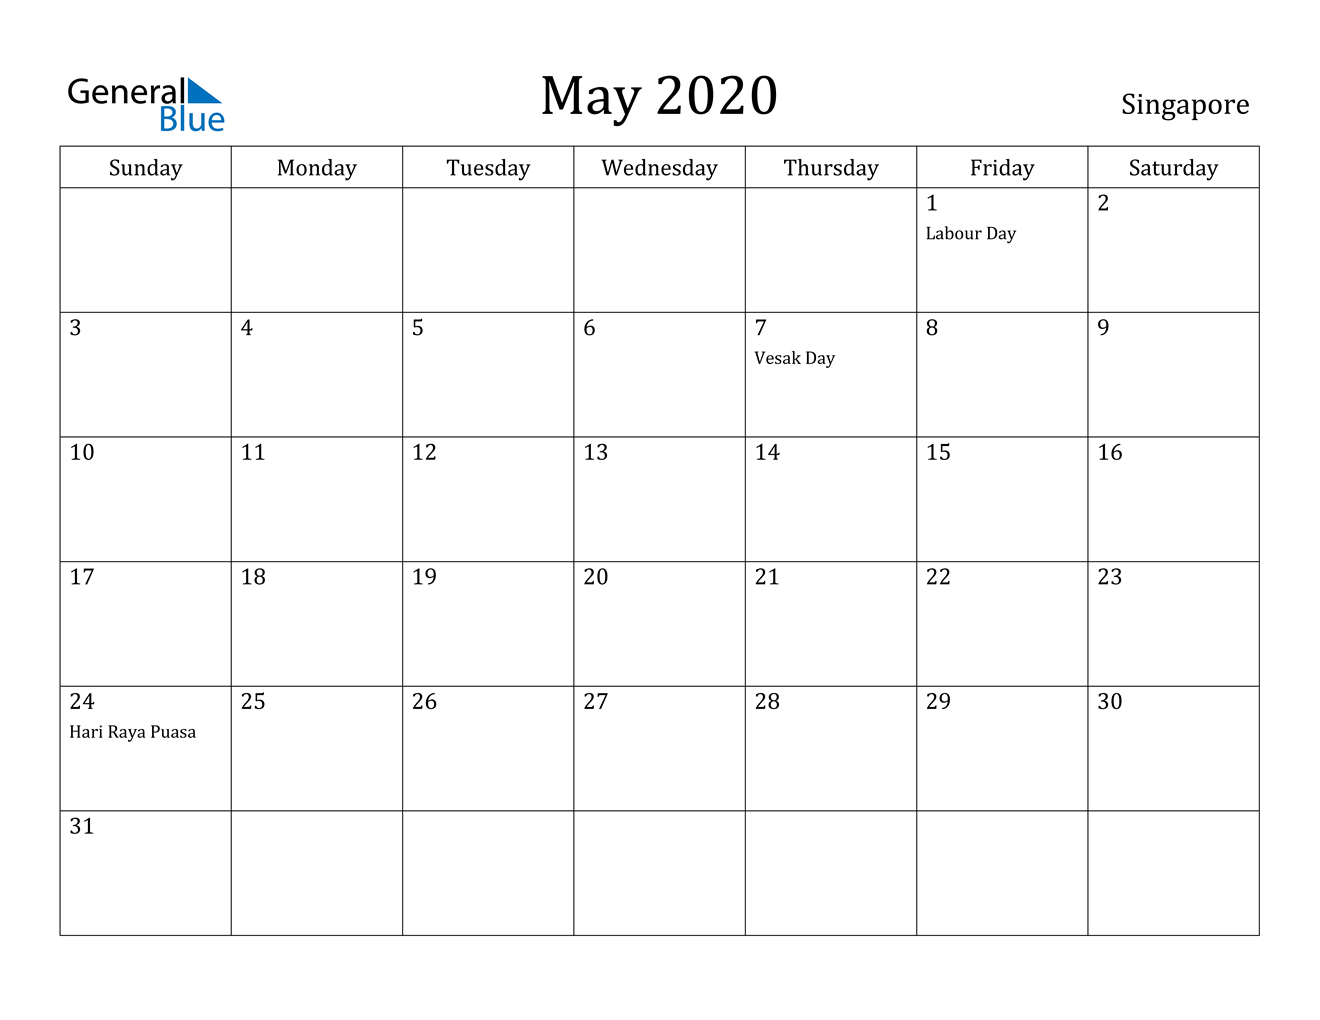 May 2020 Calendar - Singapore